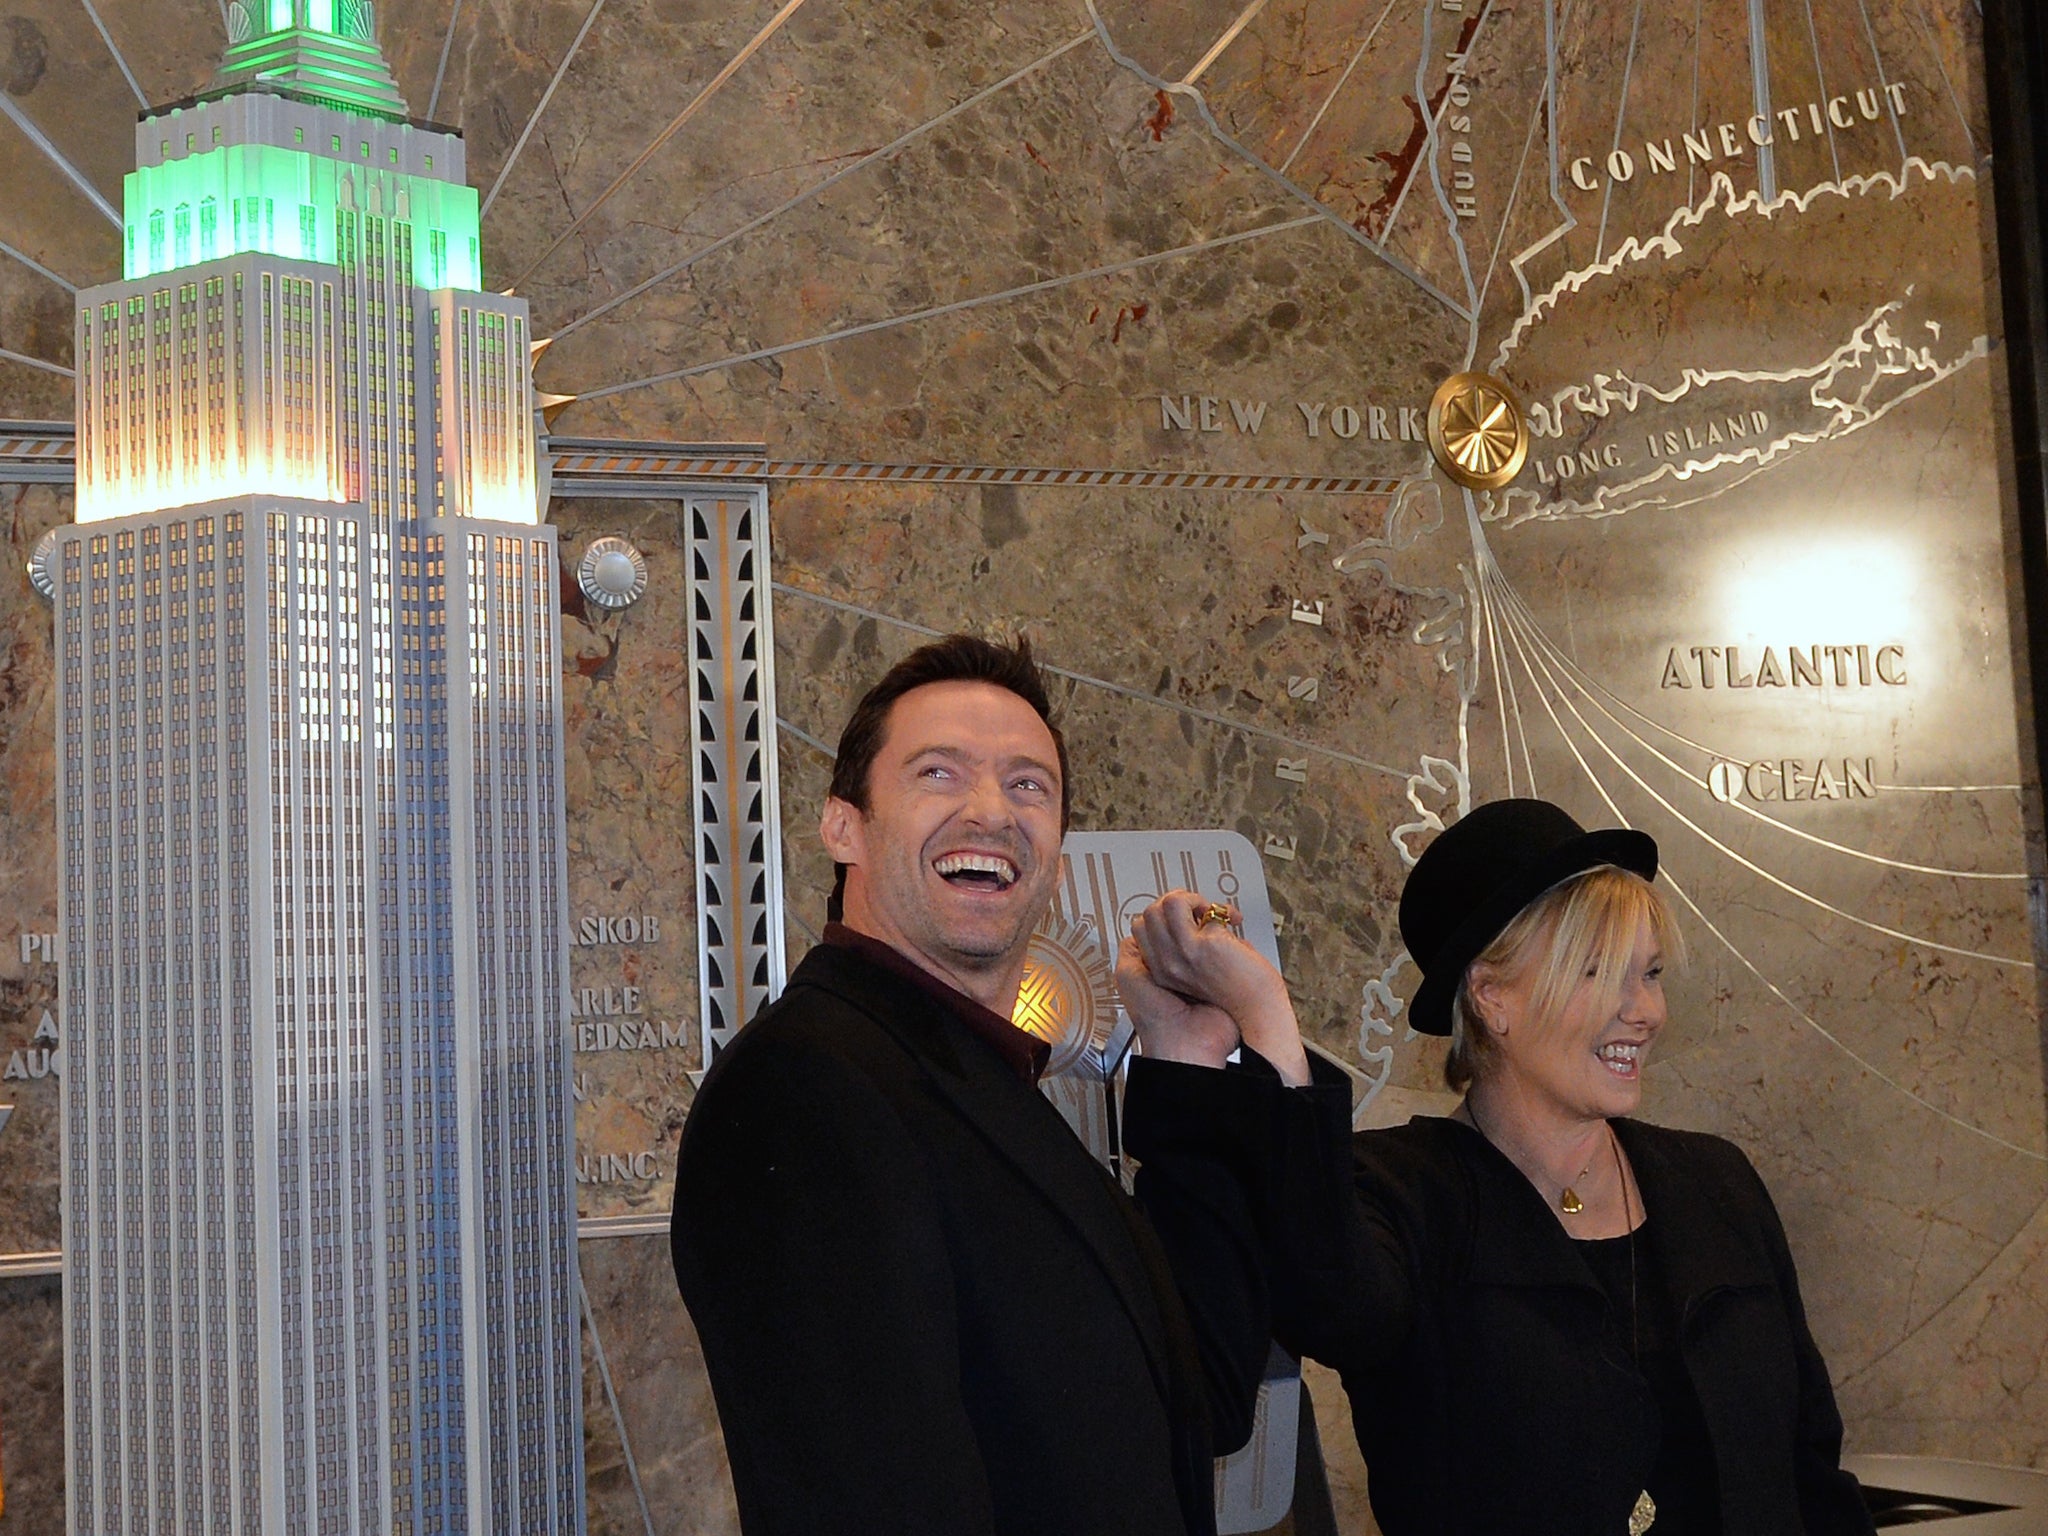 Hugh Jackman and Deborra-Lee Furness smile in New York